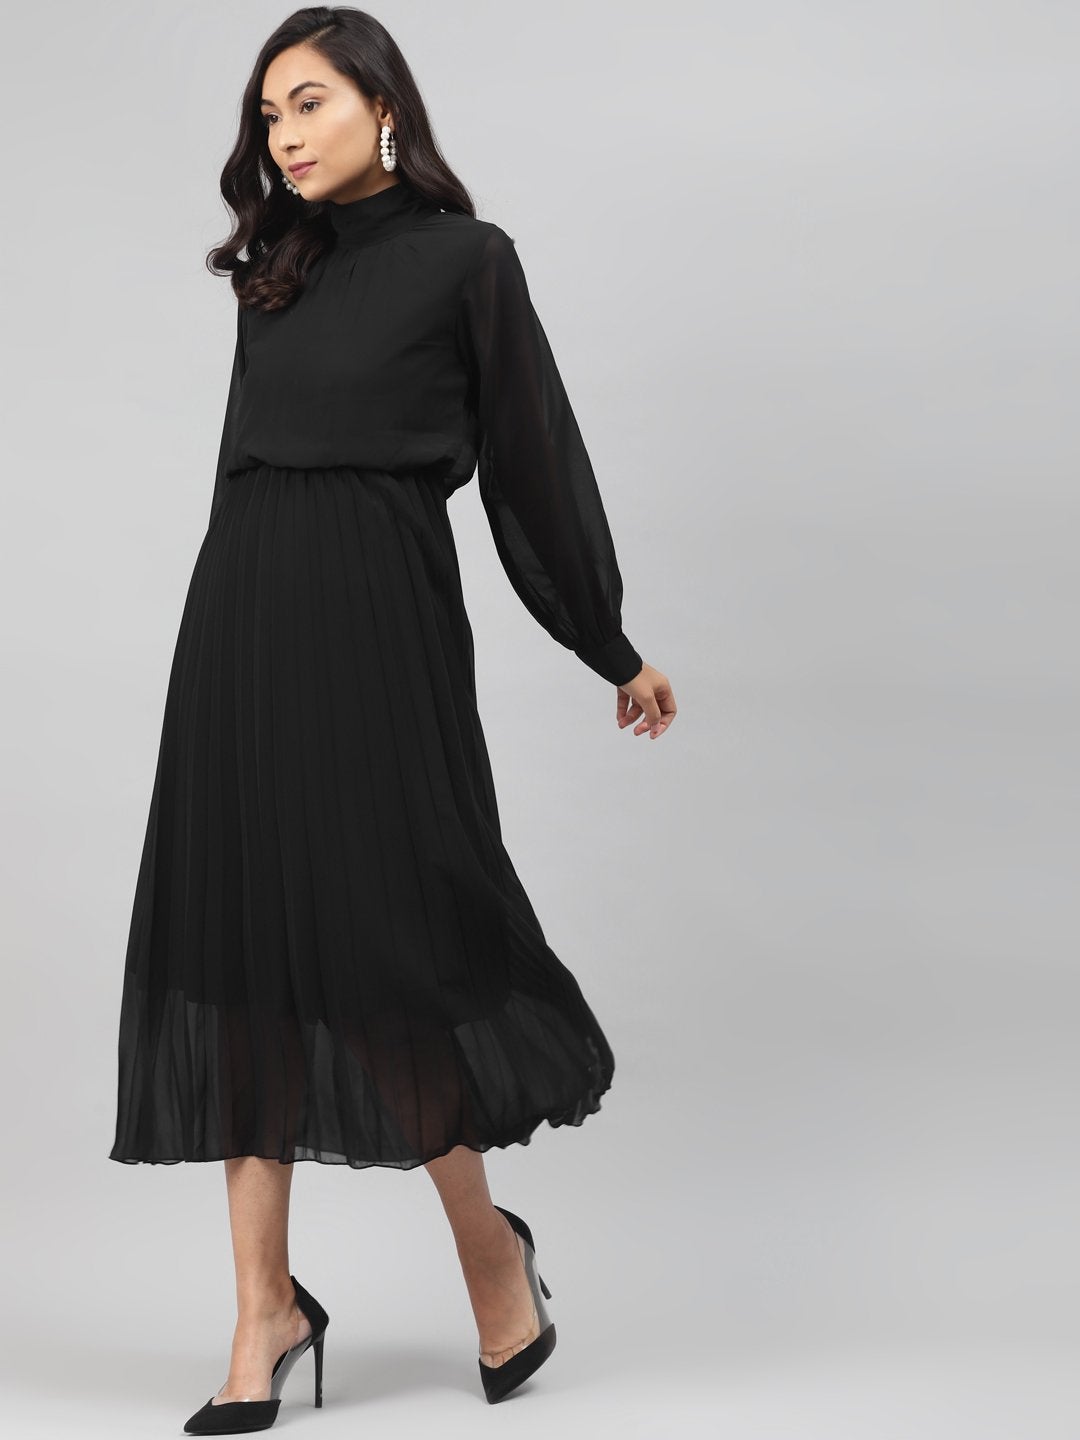 Women's Black Neck Tie-Up Pleated Dress - SASSAFRAS